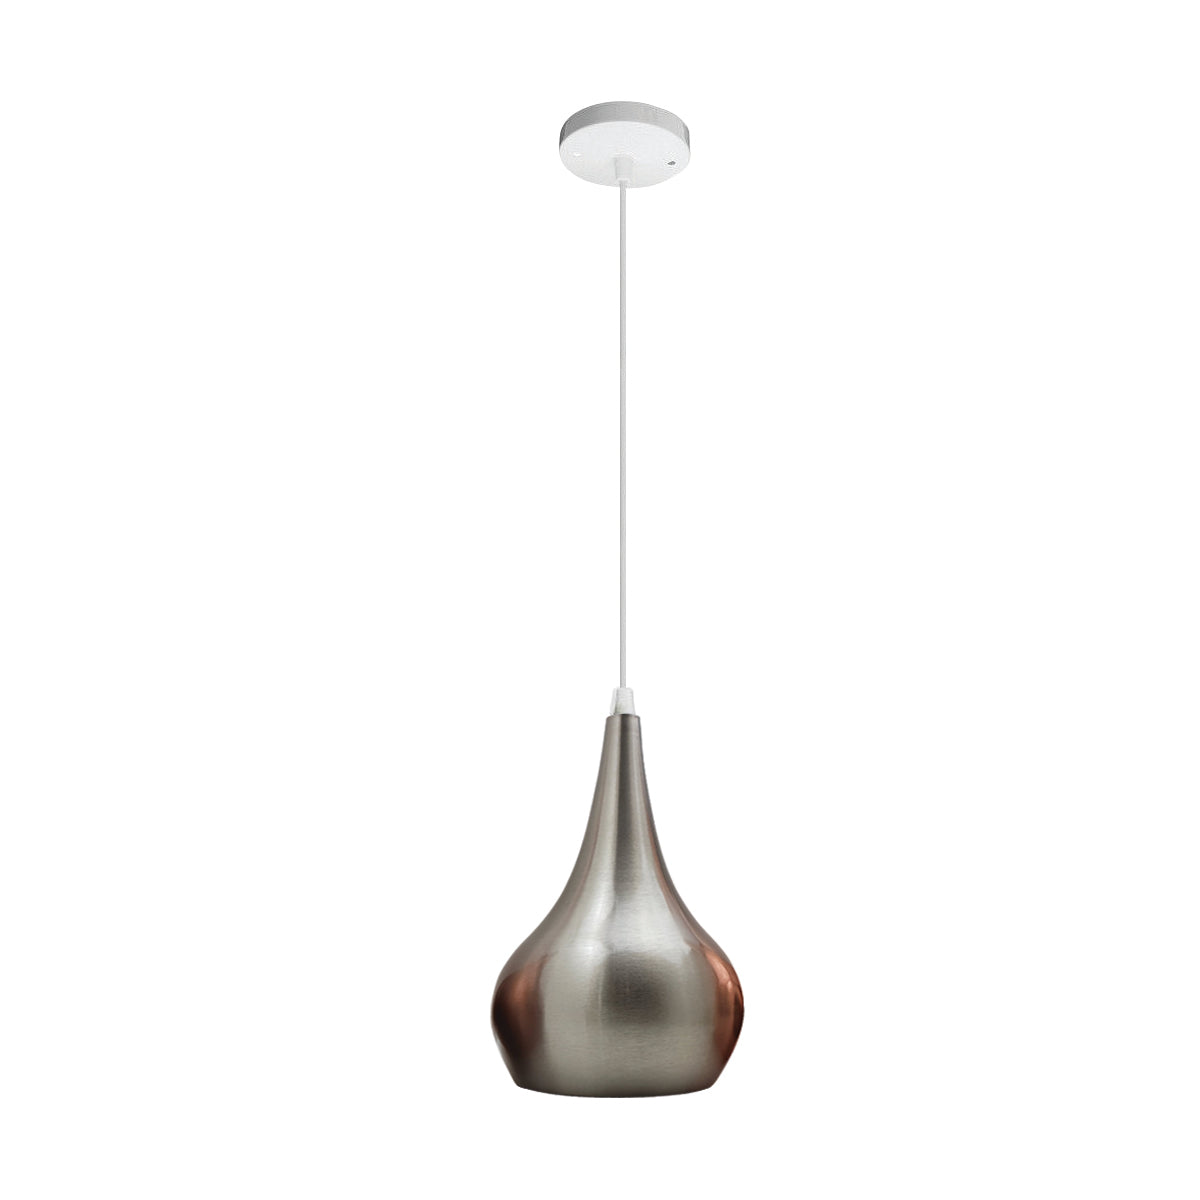 Ceiling Satin Nickel Colour Pendant Lamp Light Retro Industrial Modern Indoor Metal Gloss Style~2546 - LEDSone UK Ltd